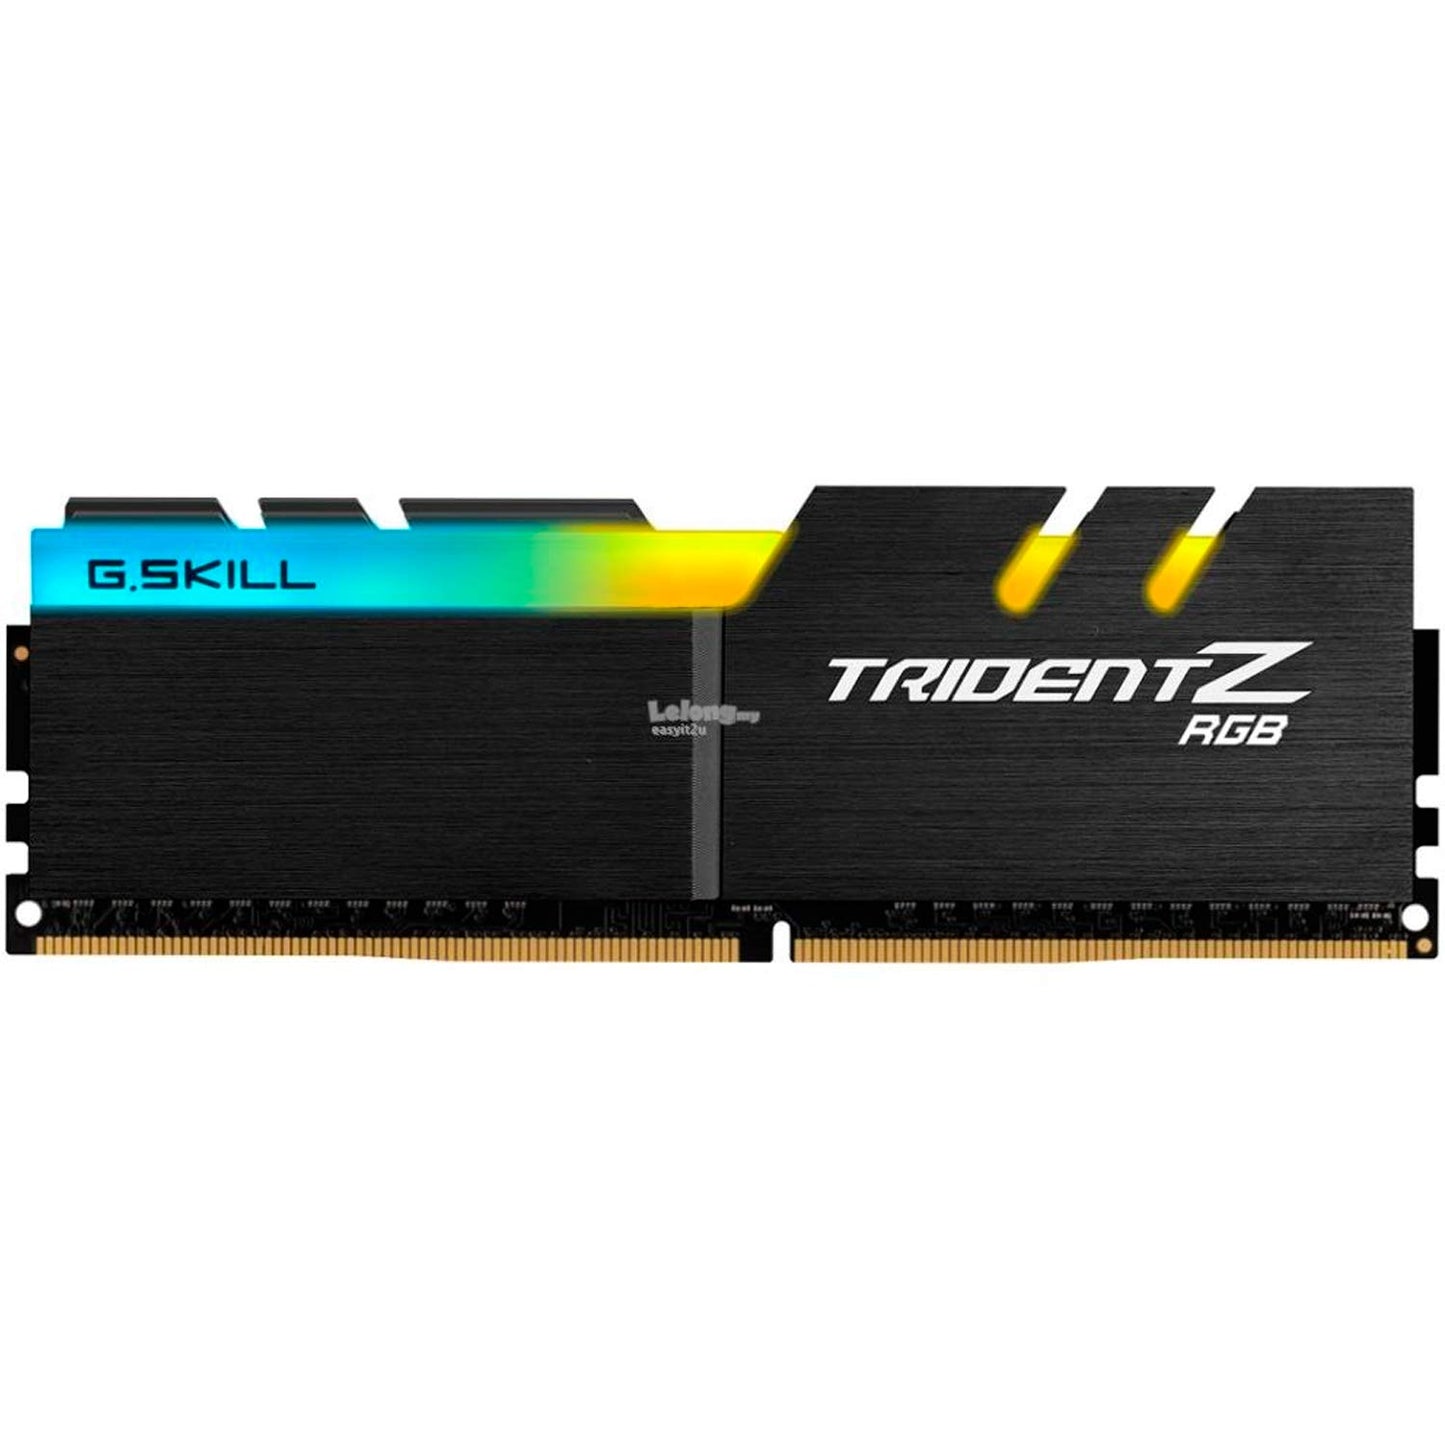 G.SKILL Trident Z 16GB RGB DDR4 RAM 3200MHz CL16 डेस्कटॉप गेमिंग मेमोरी